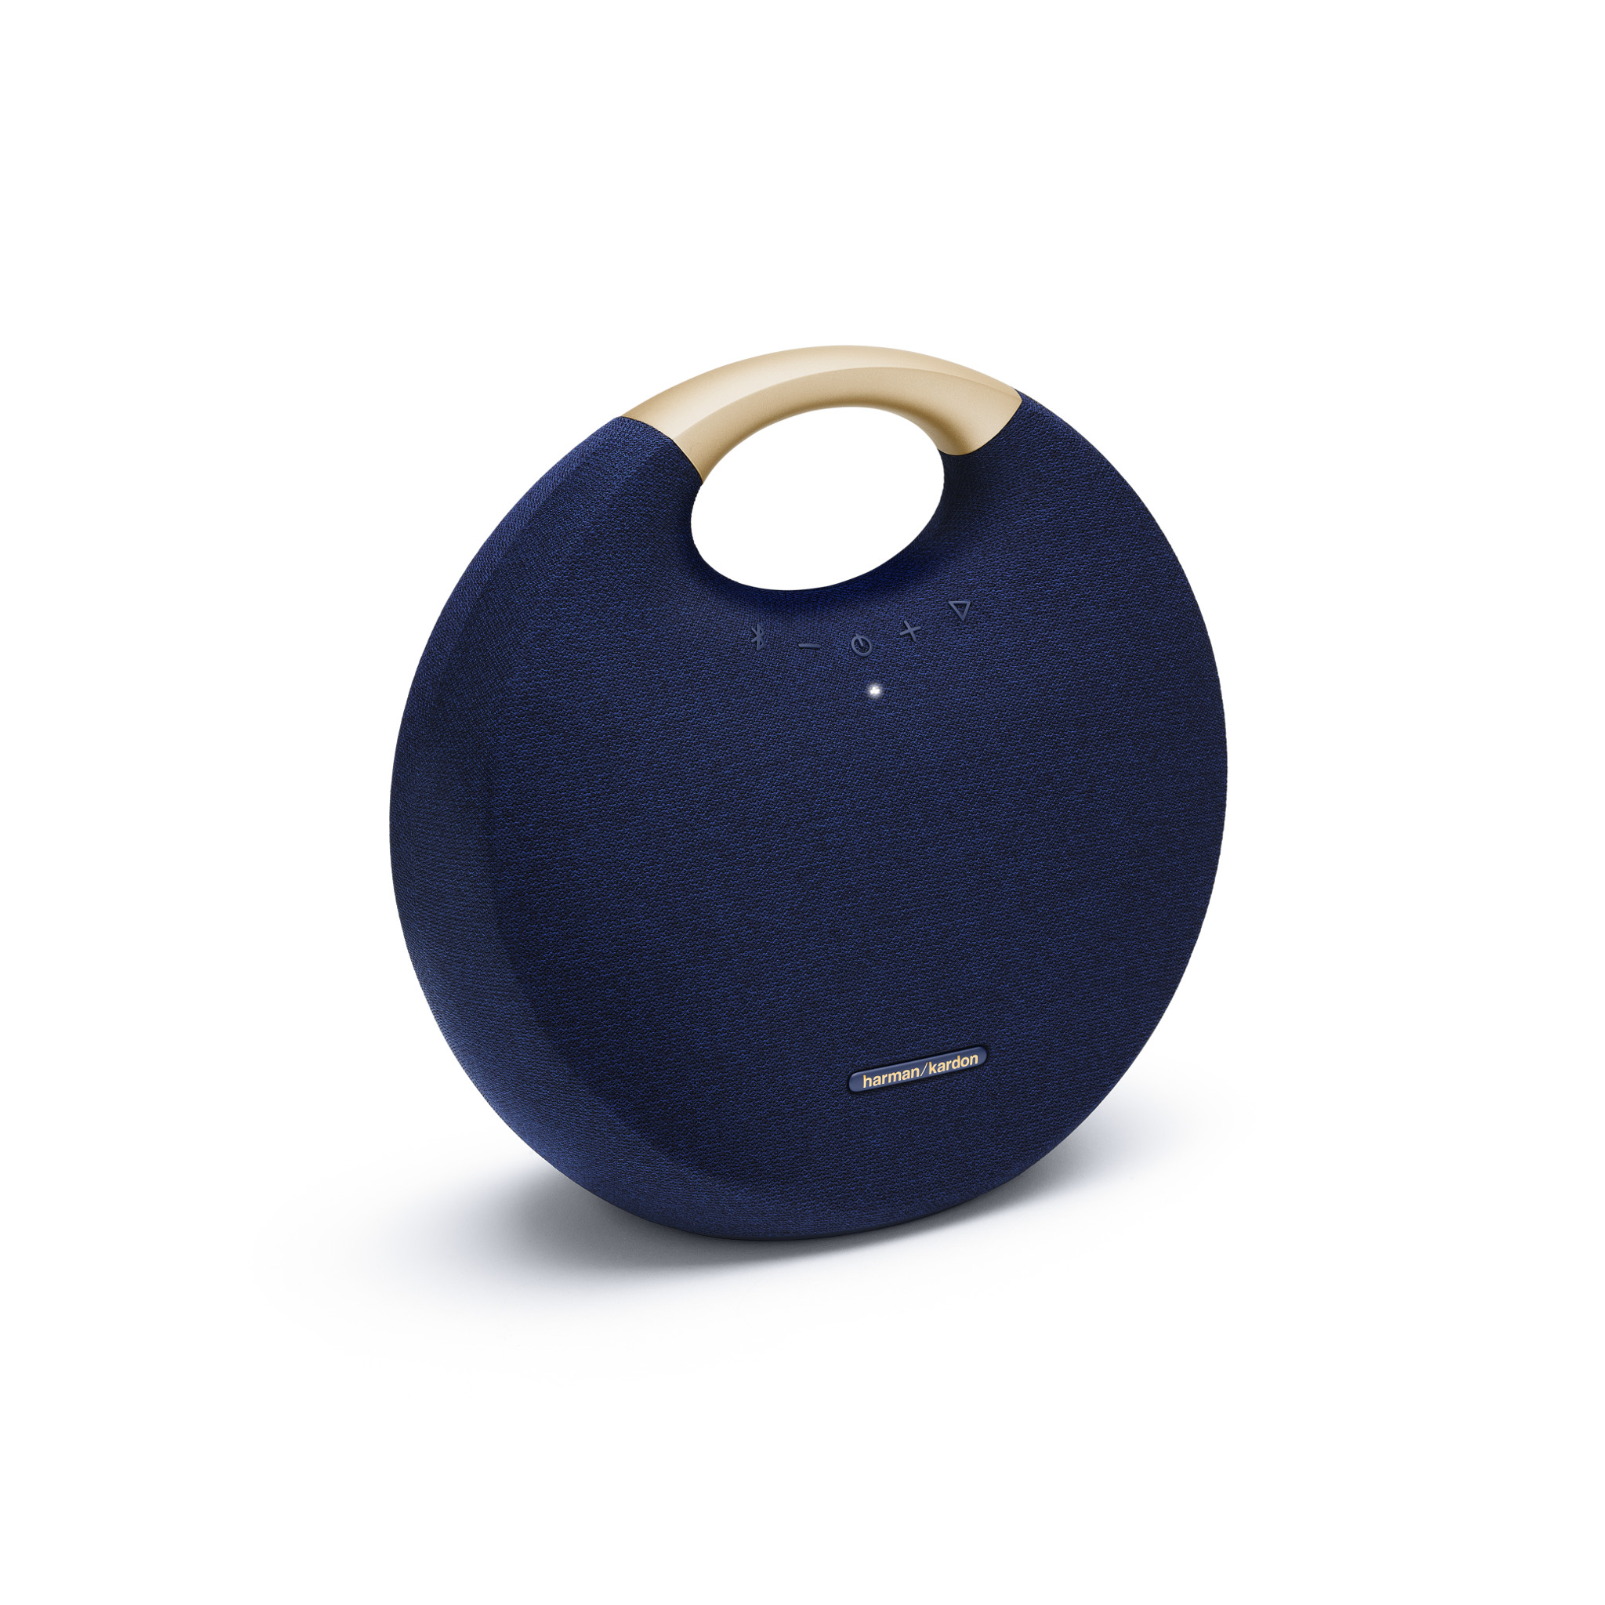 Onyx Studio 6 - Blue - Portable Bluetooth speaker - Detailshot 2